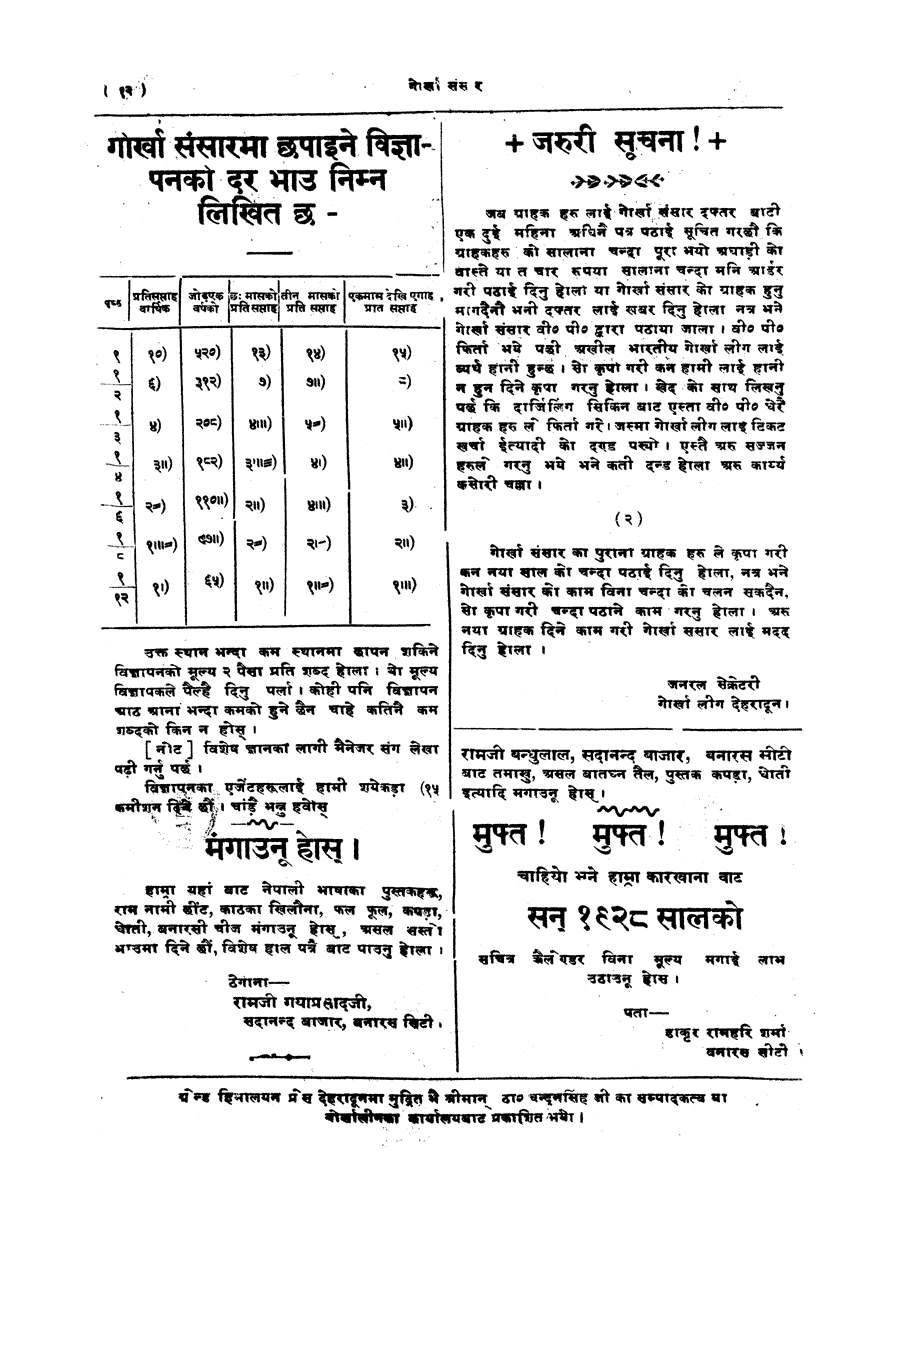 Gorkha Sansar, 22 June 1928, page 12